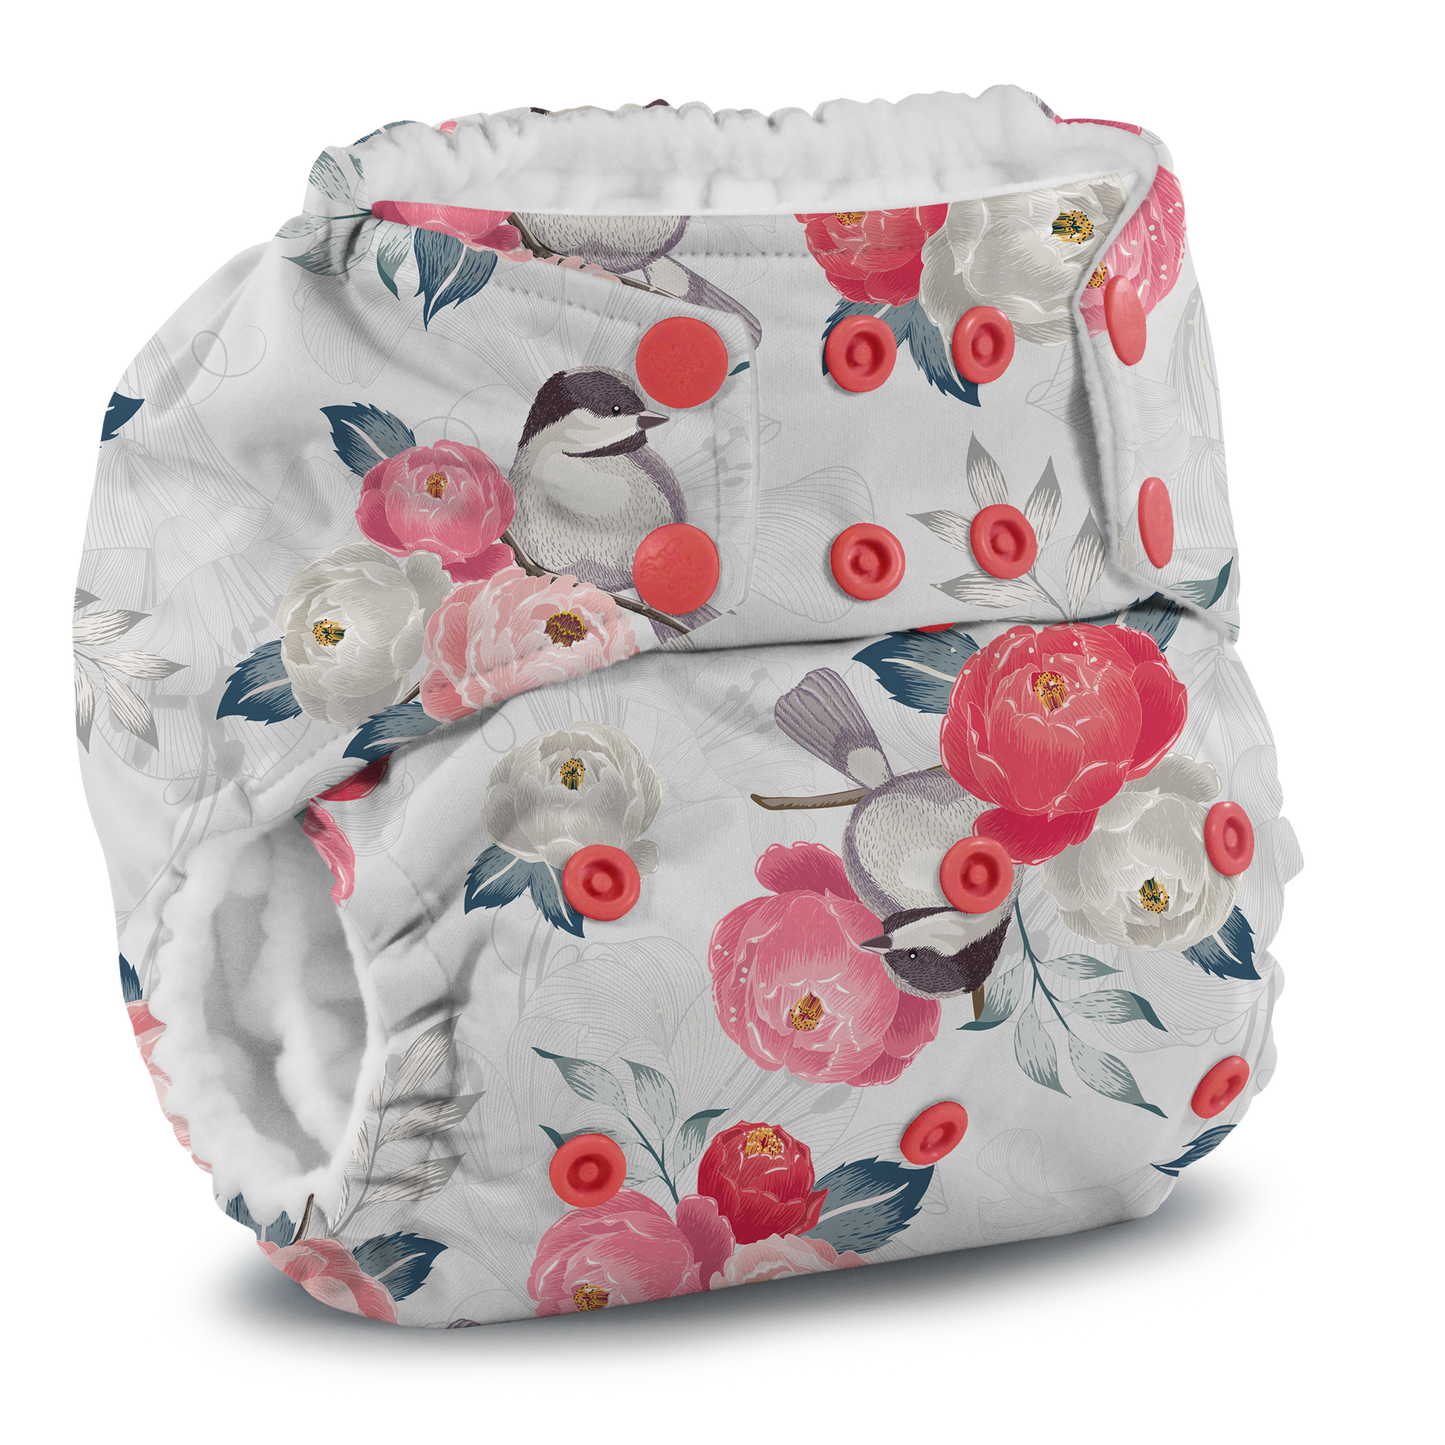 Rumparooz G2 One Size Pocket Diaper with Prints (FINAL SALE)